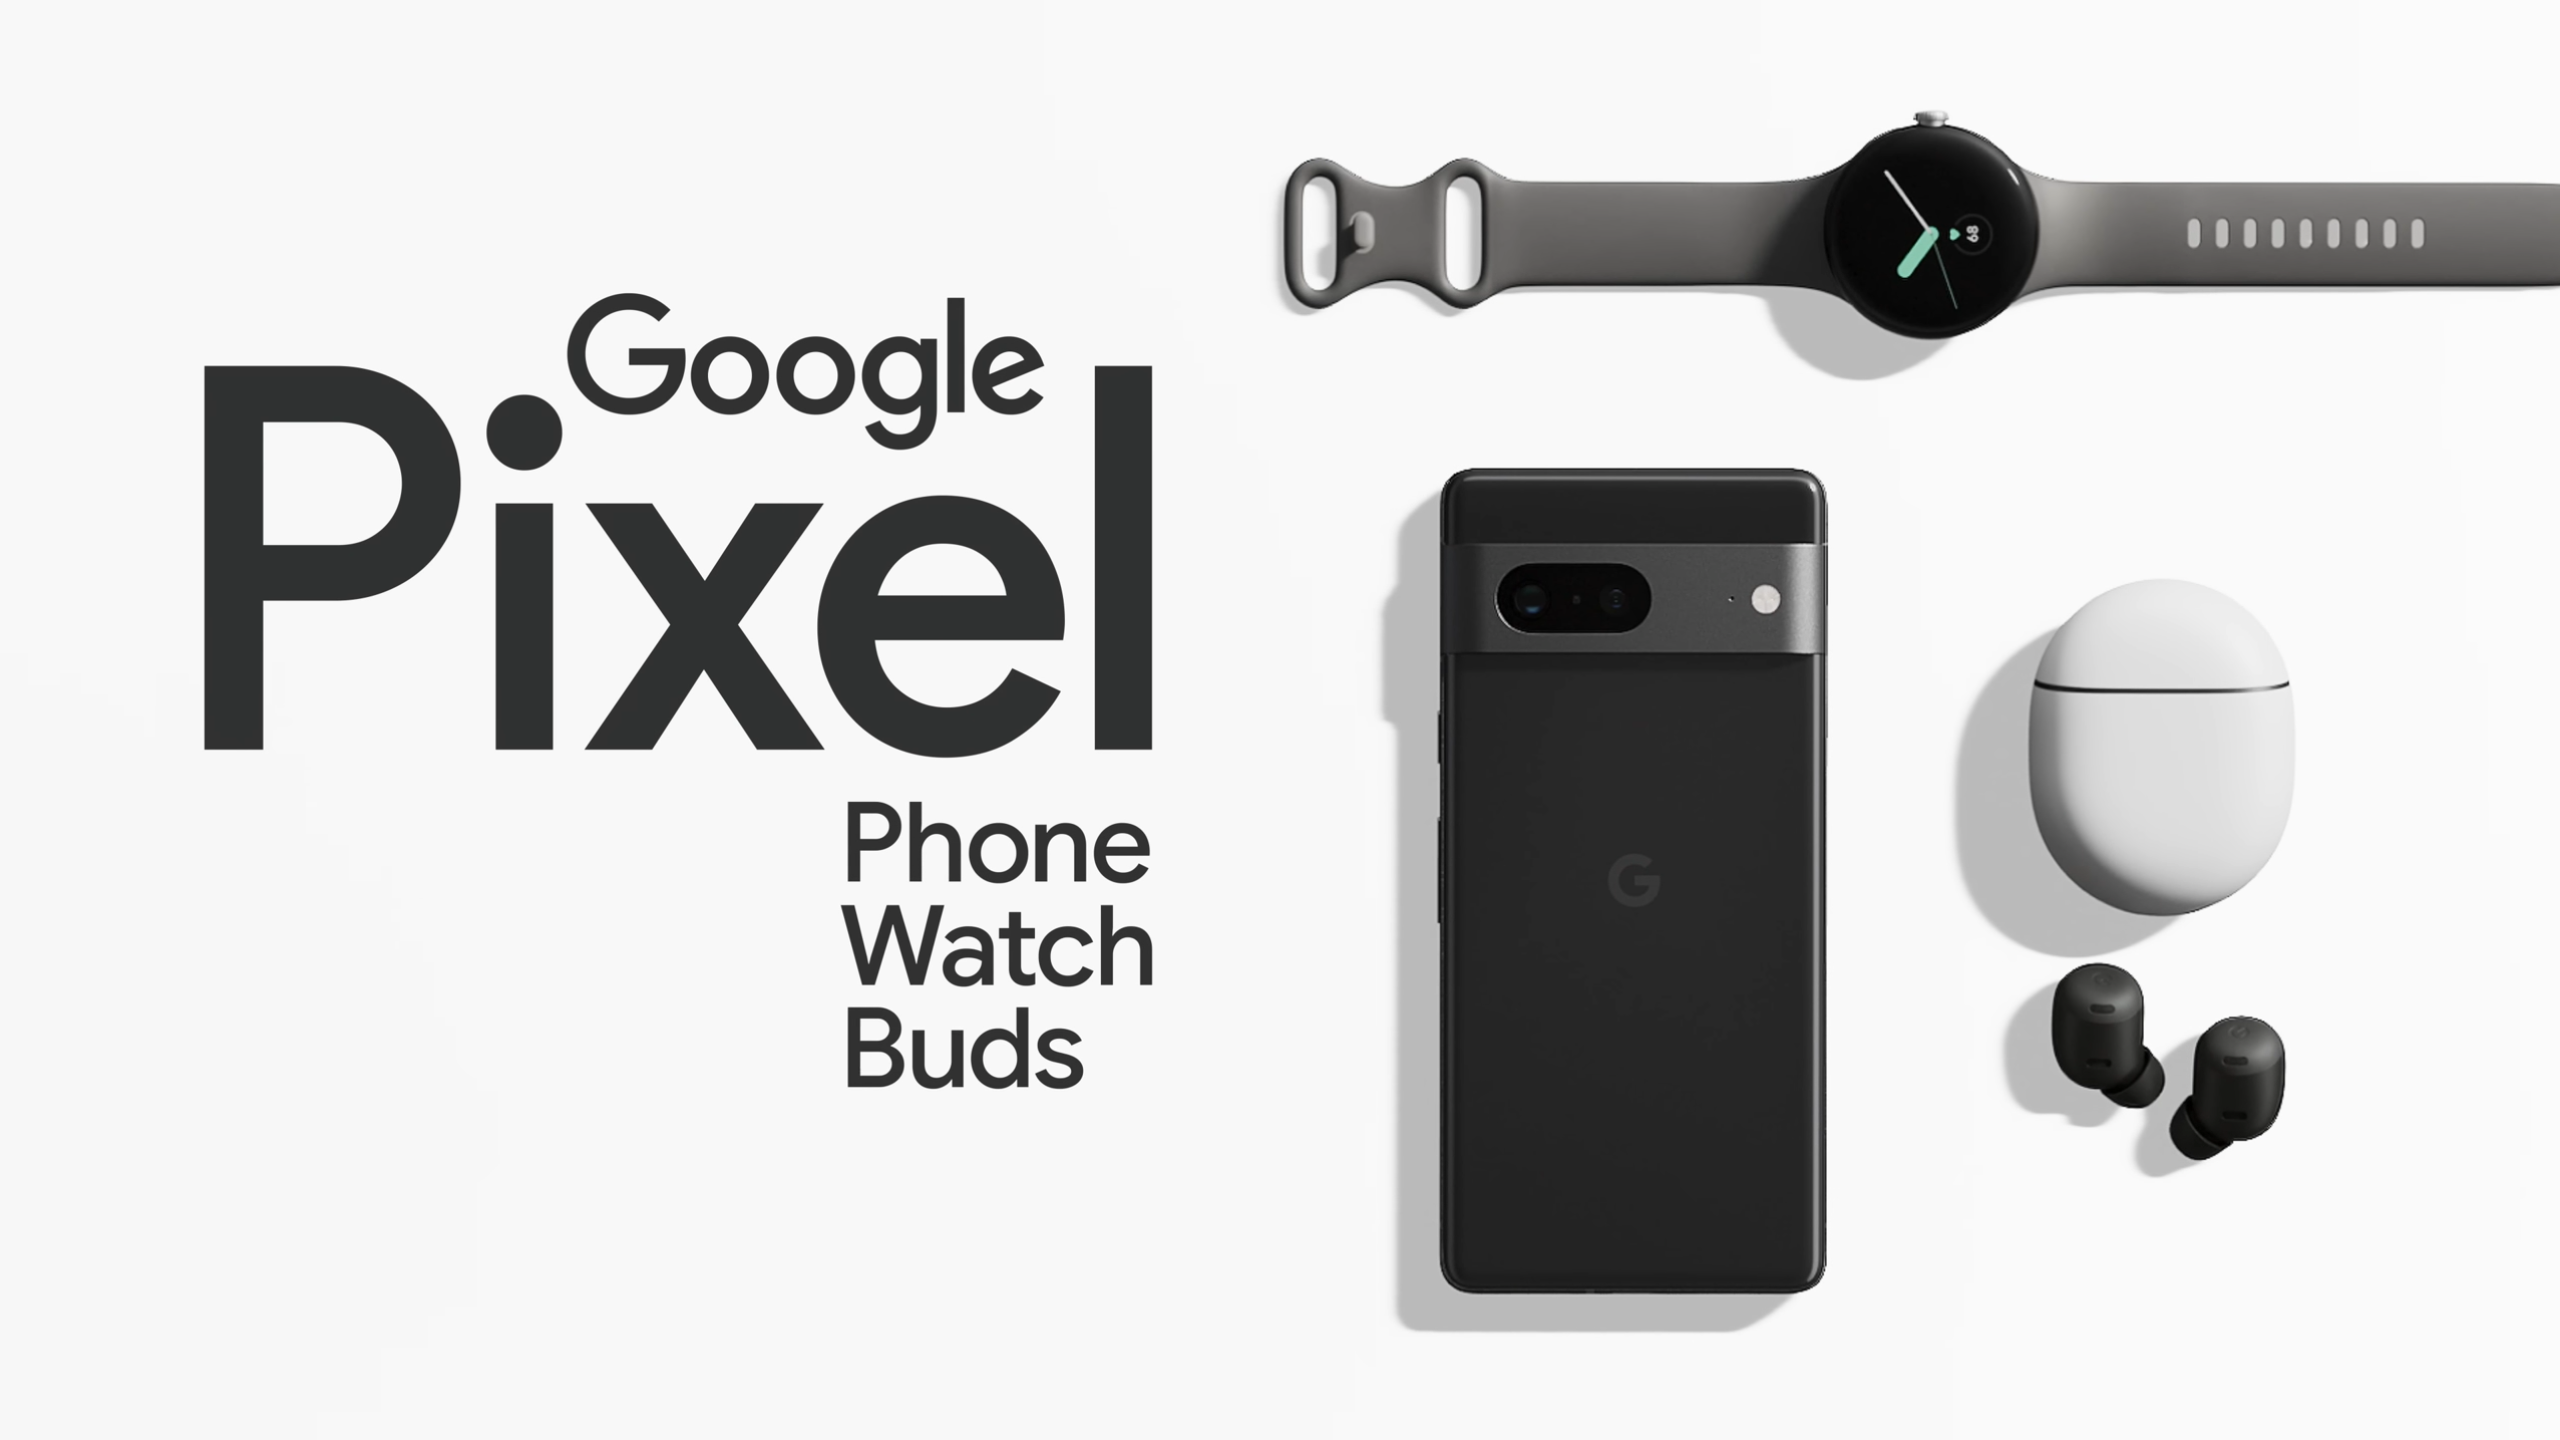 Your Google Pixel device just got better